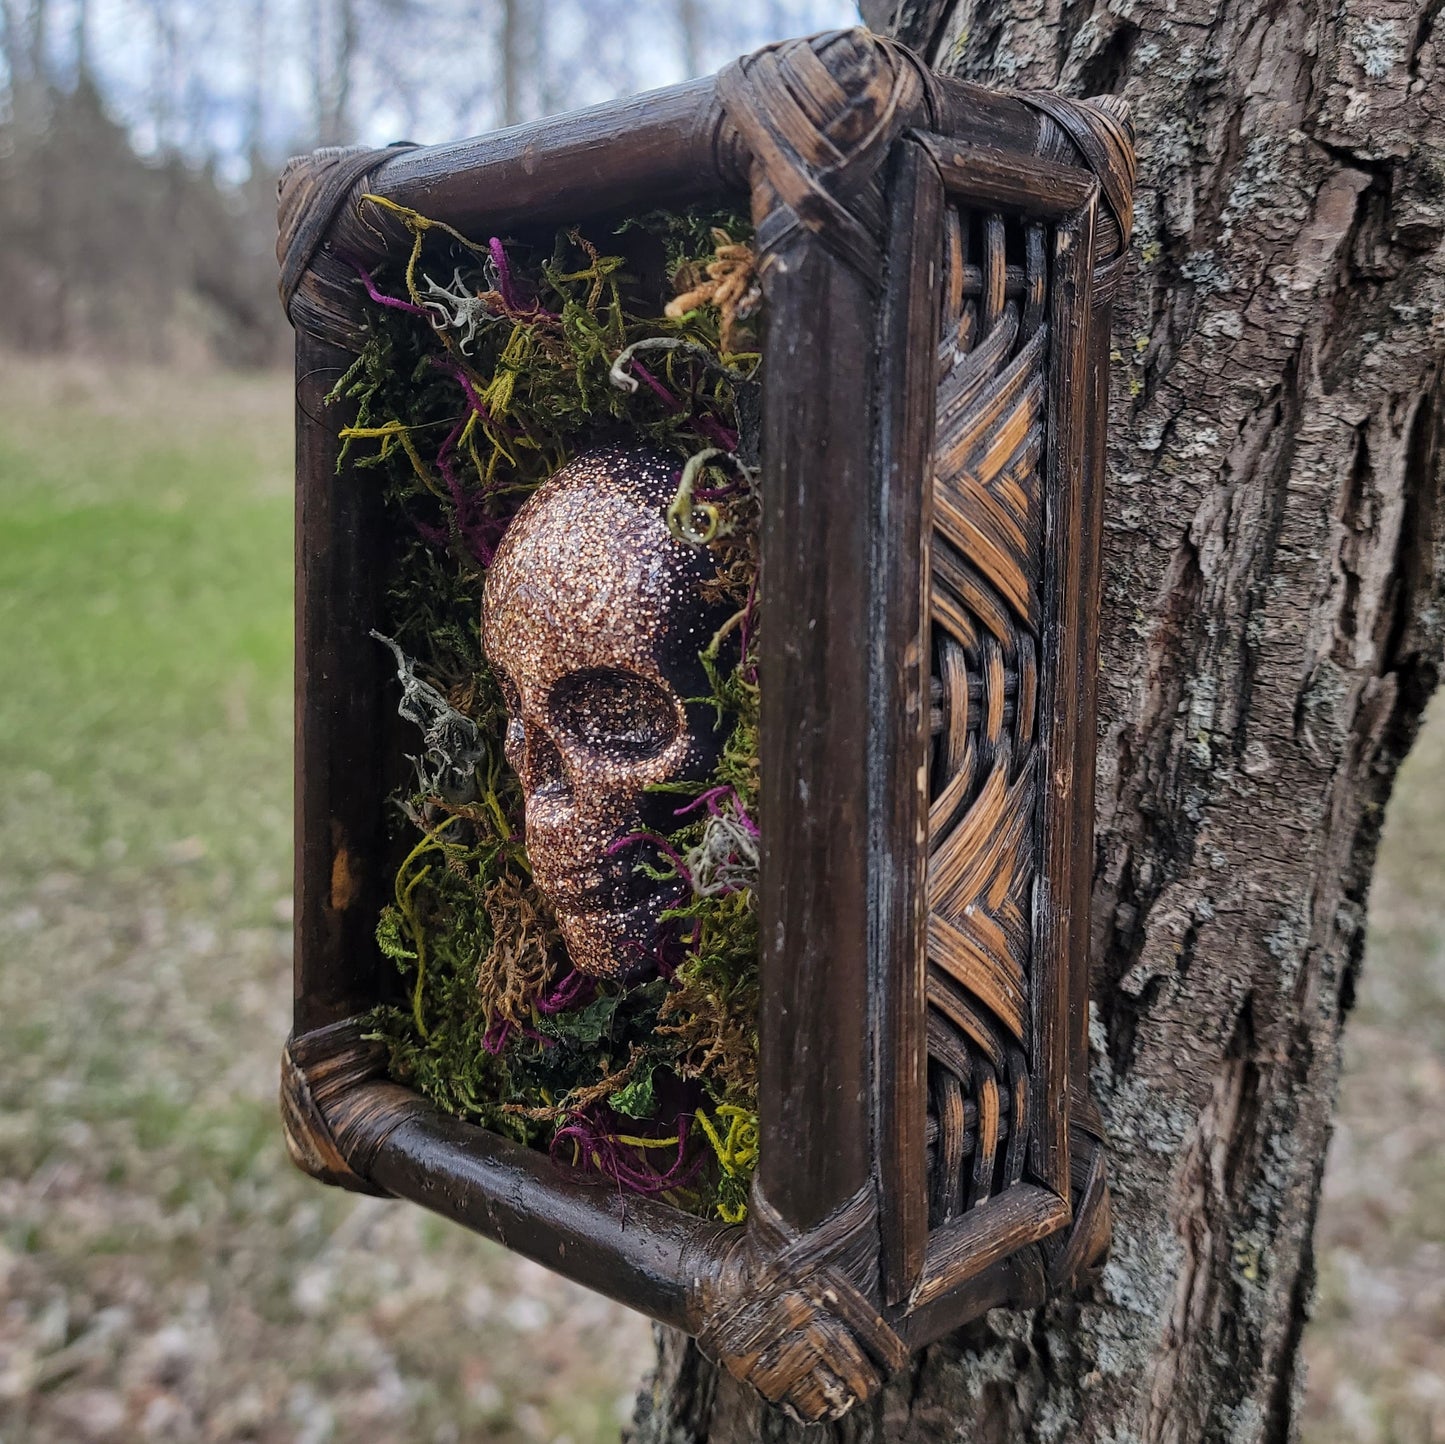 Handmade Resin Skull in Vintage Box